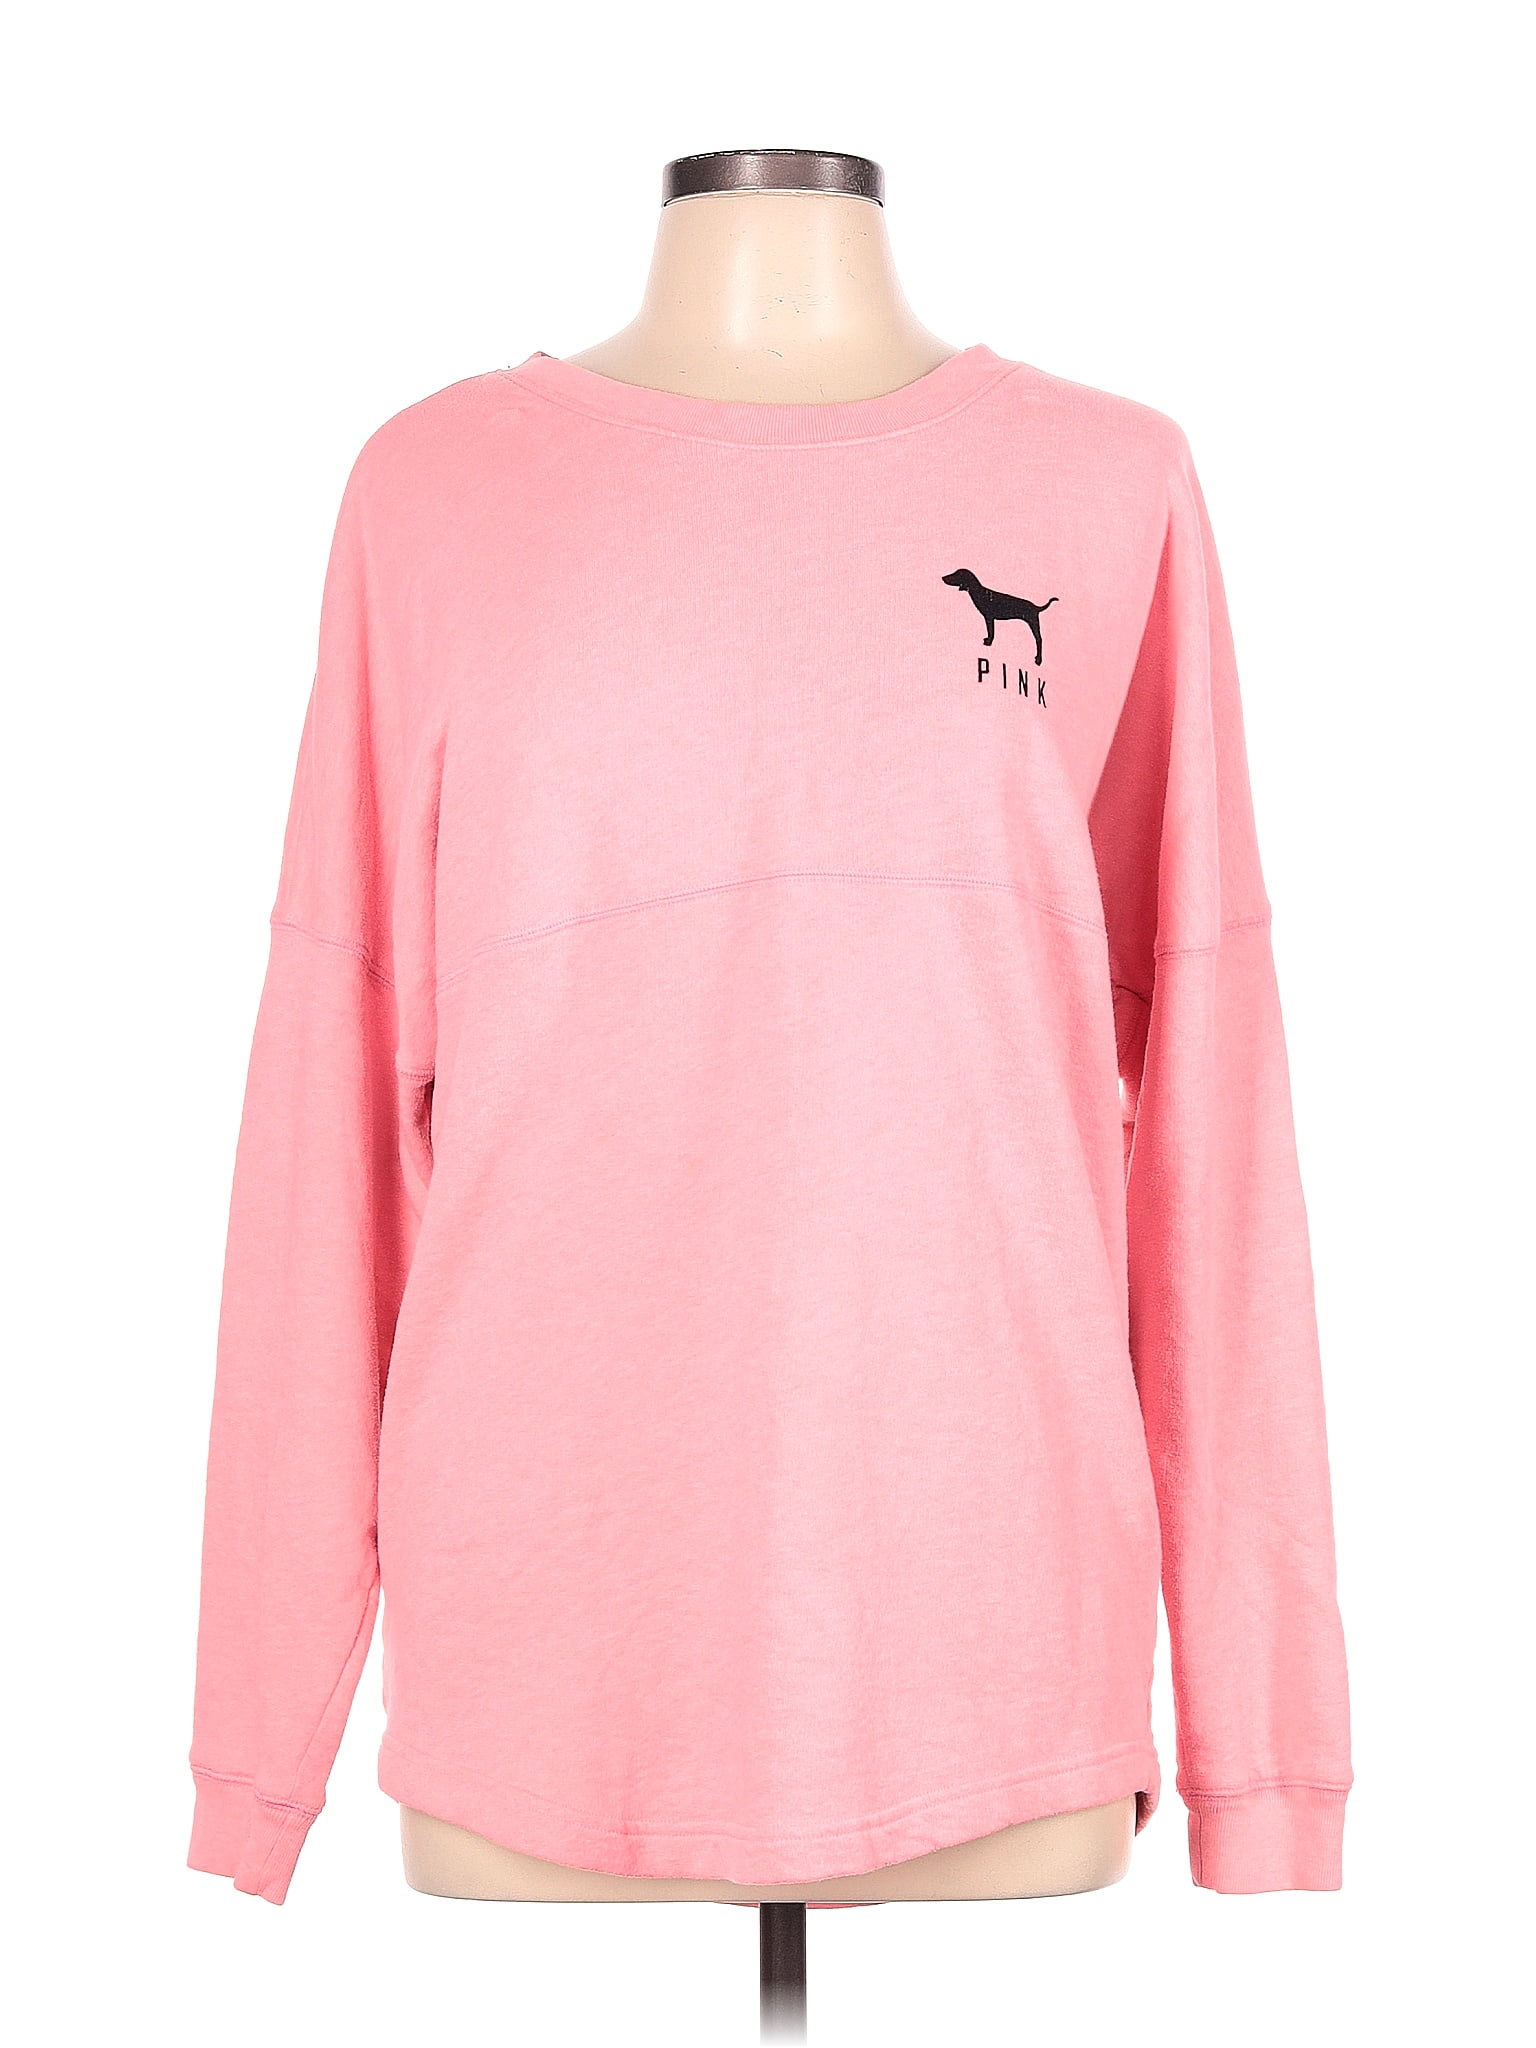 Victoria's Secret Pink Pink Sweatshirt Size L - 44% off